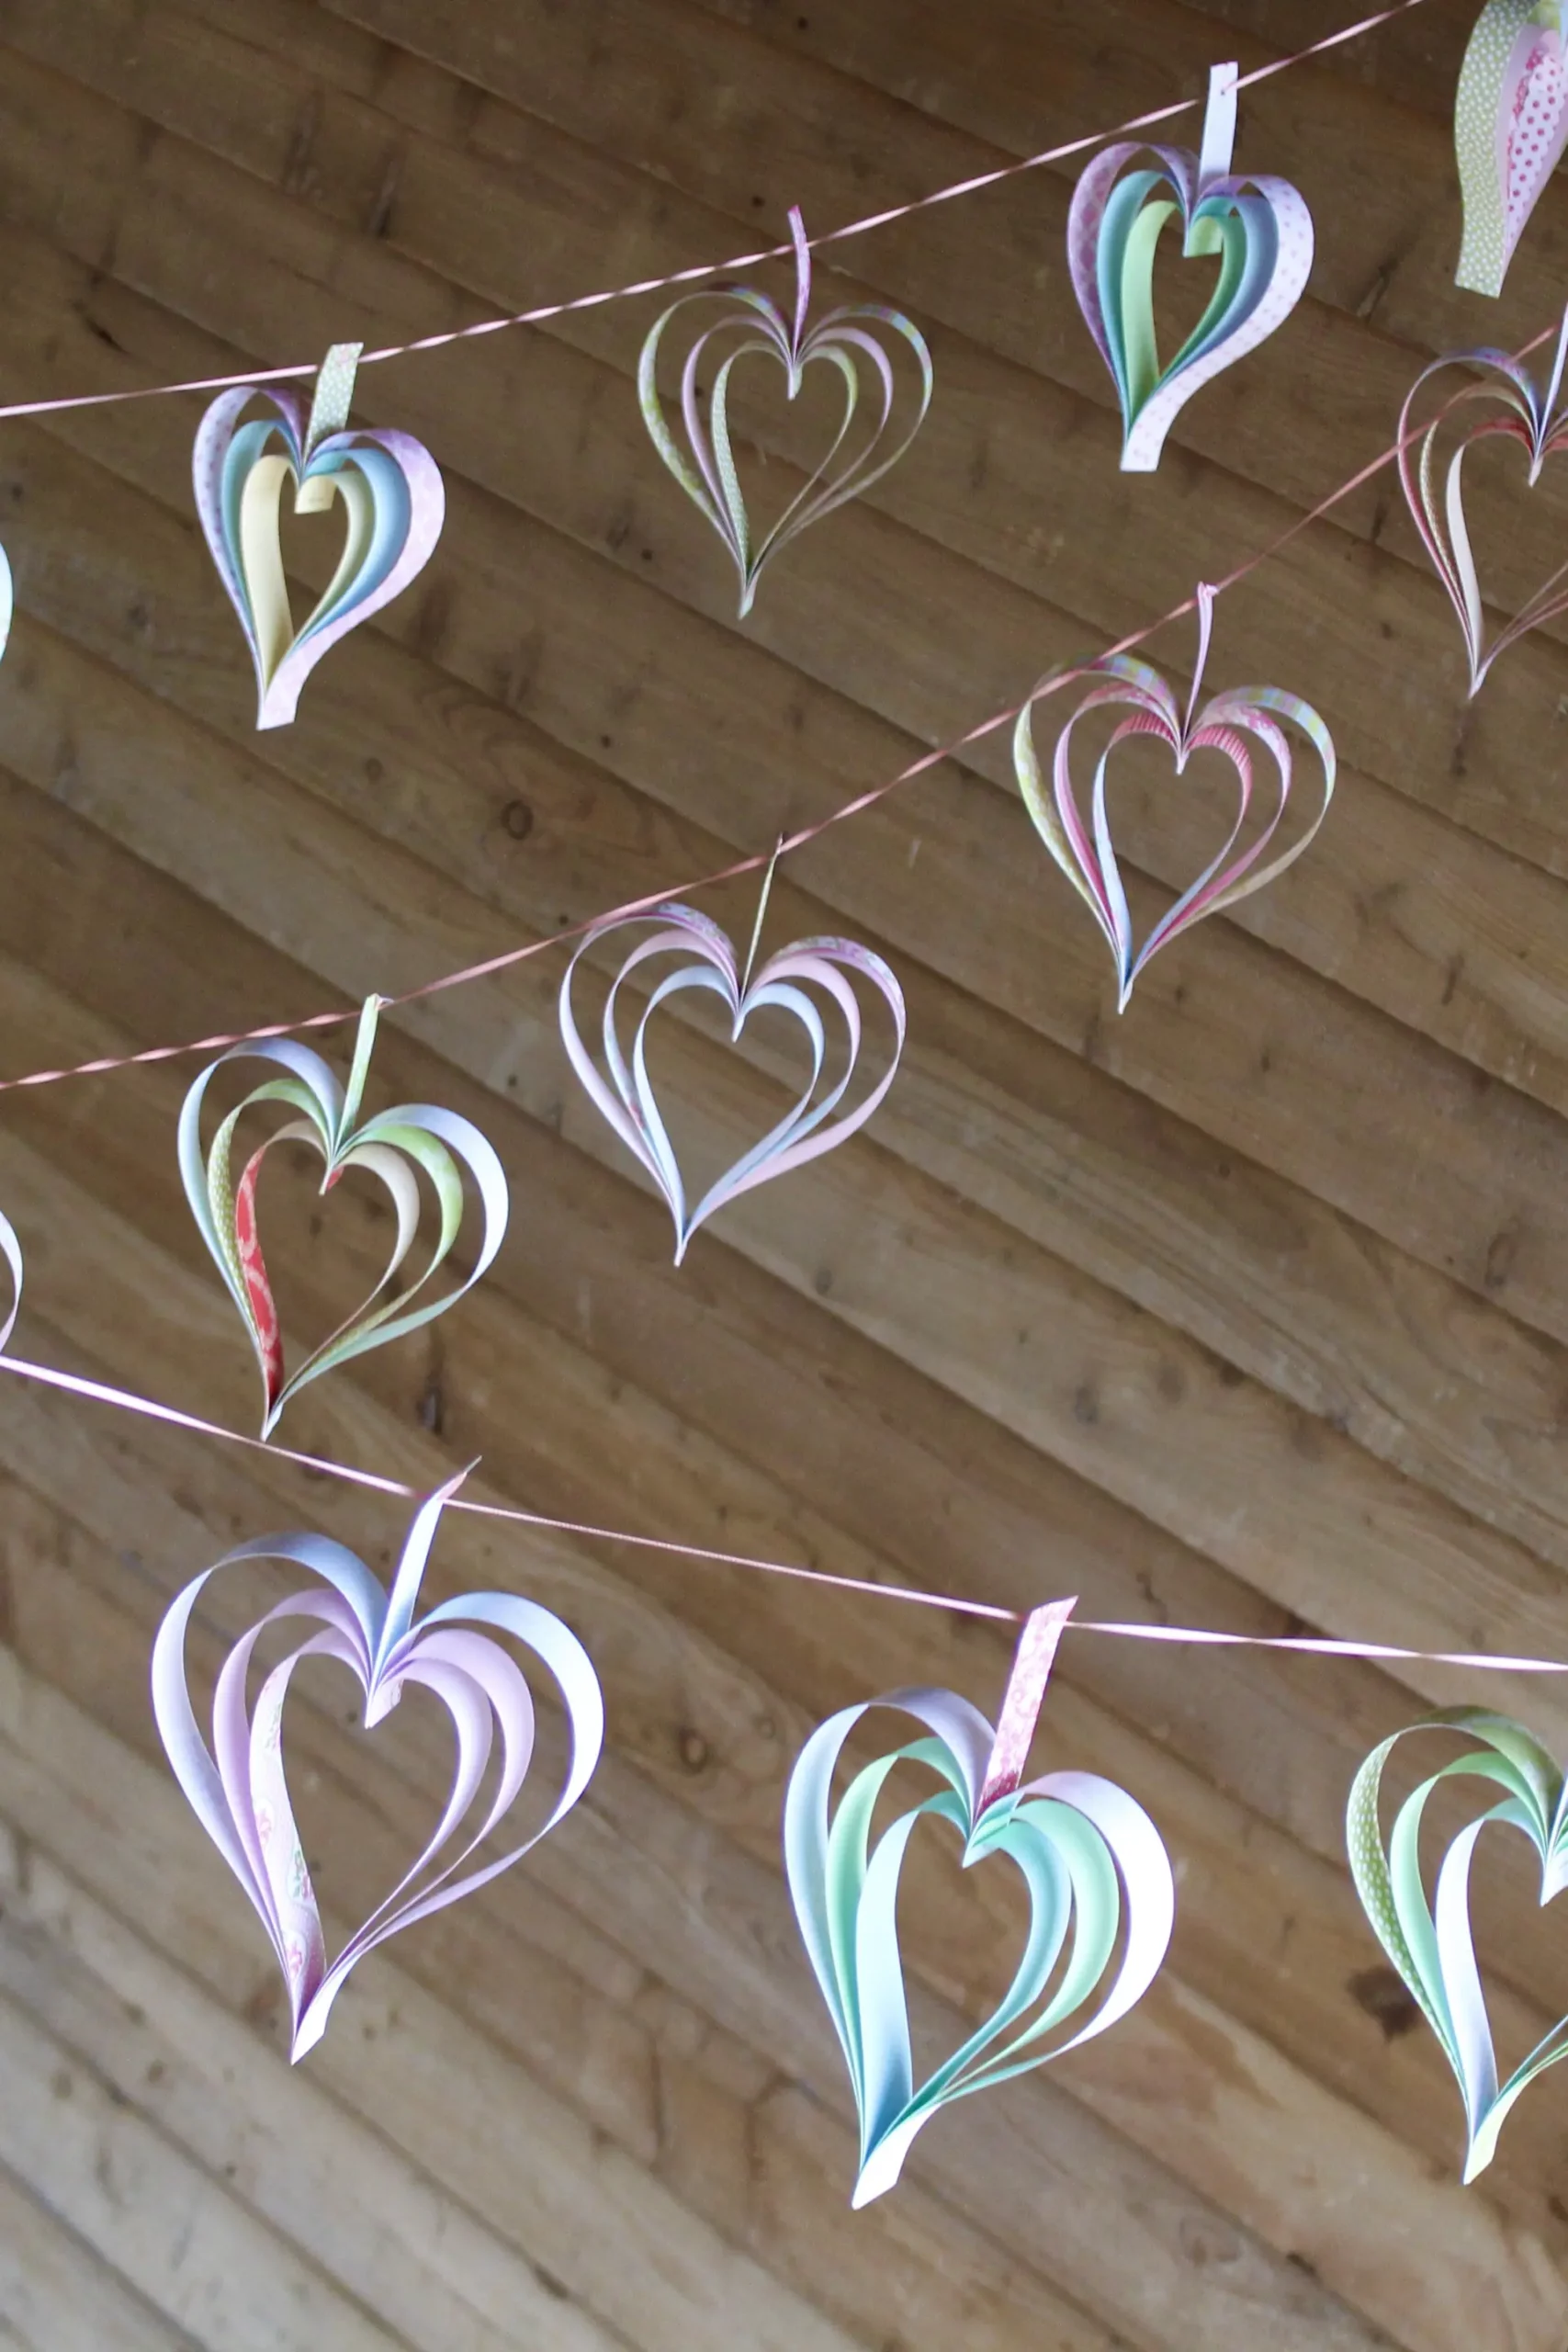 upwaltham barns weddings garlands paper hearts